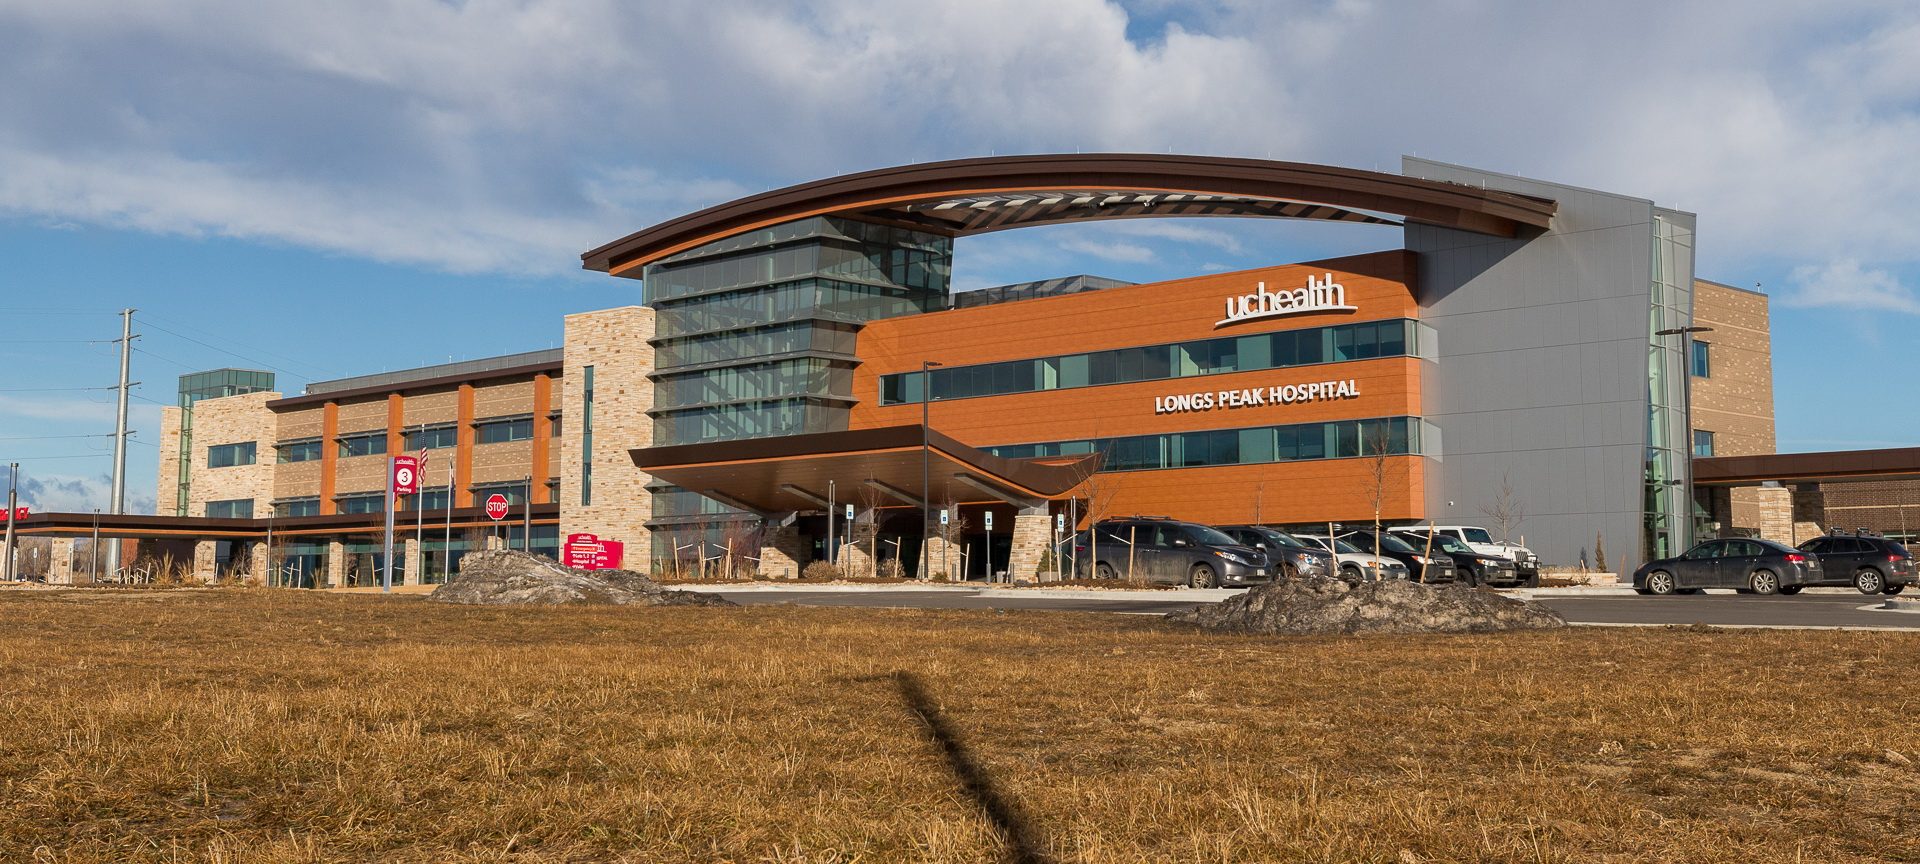 UCHealth Longs Peak Hospital